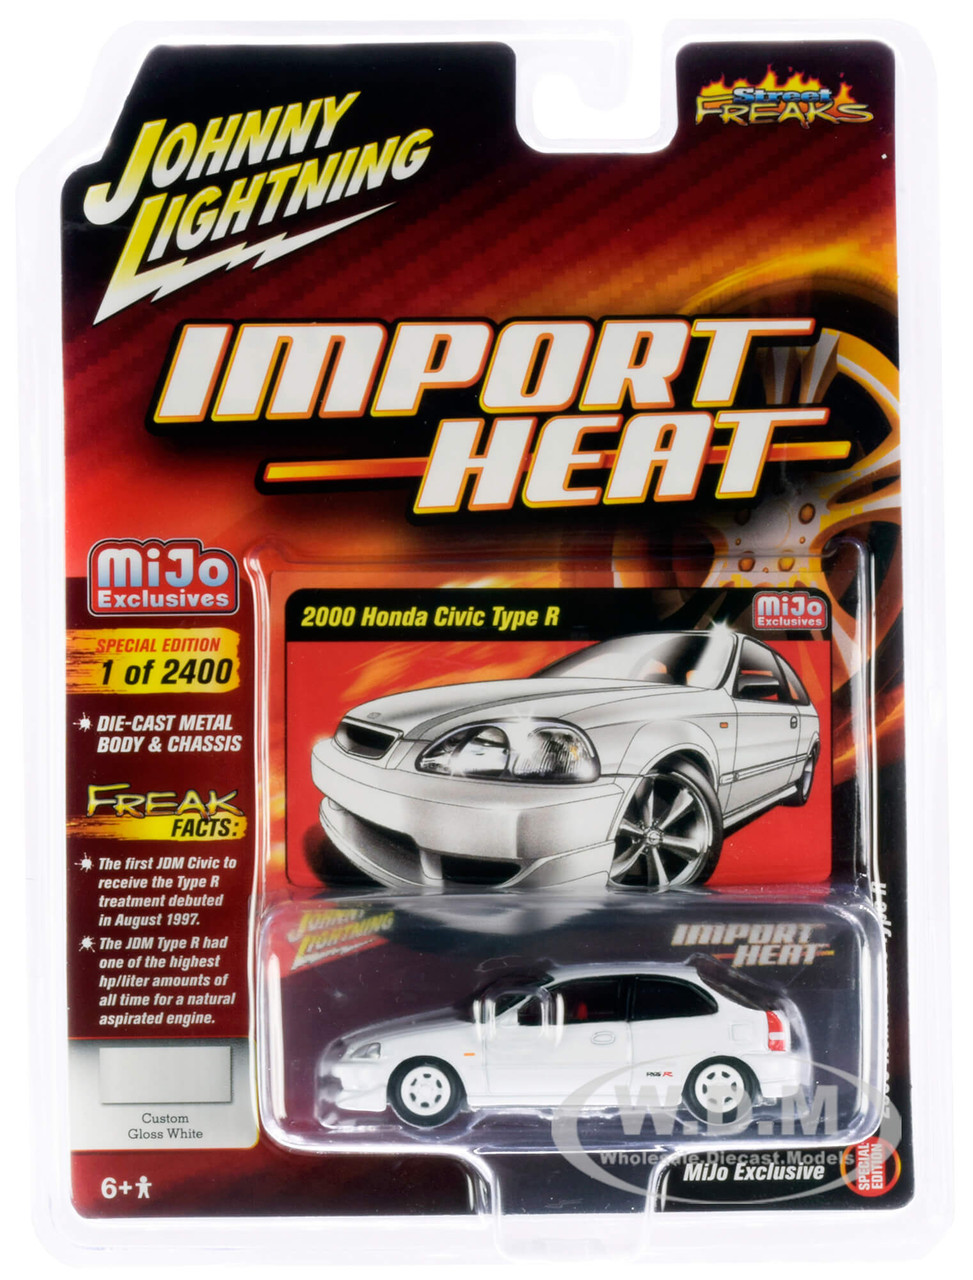 2000 Honda Civic Type R White White Wheels Red Interior Import Heat Street  Freaks Series Limited